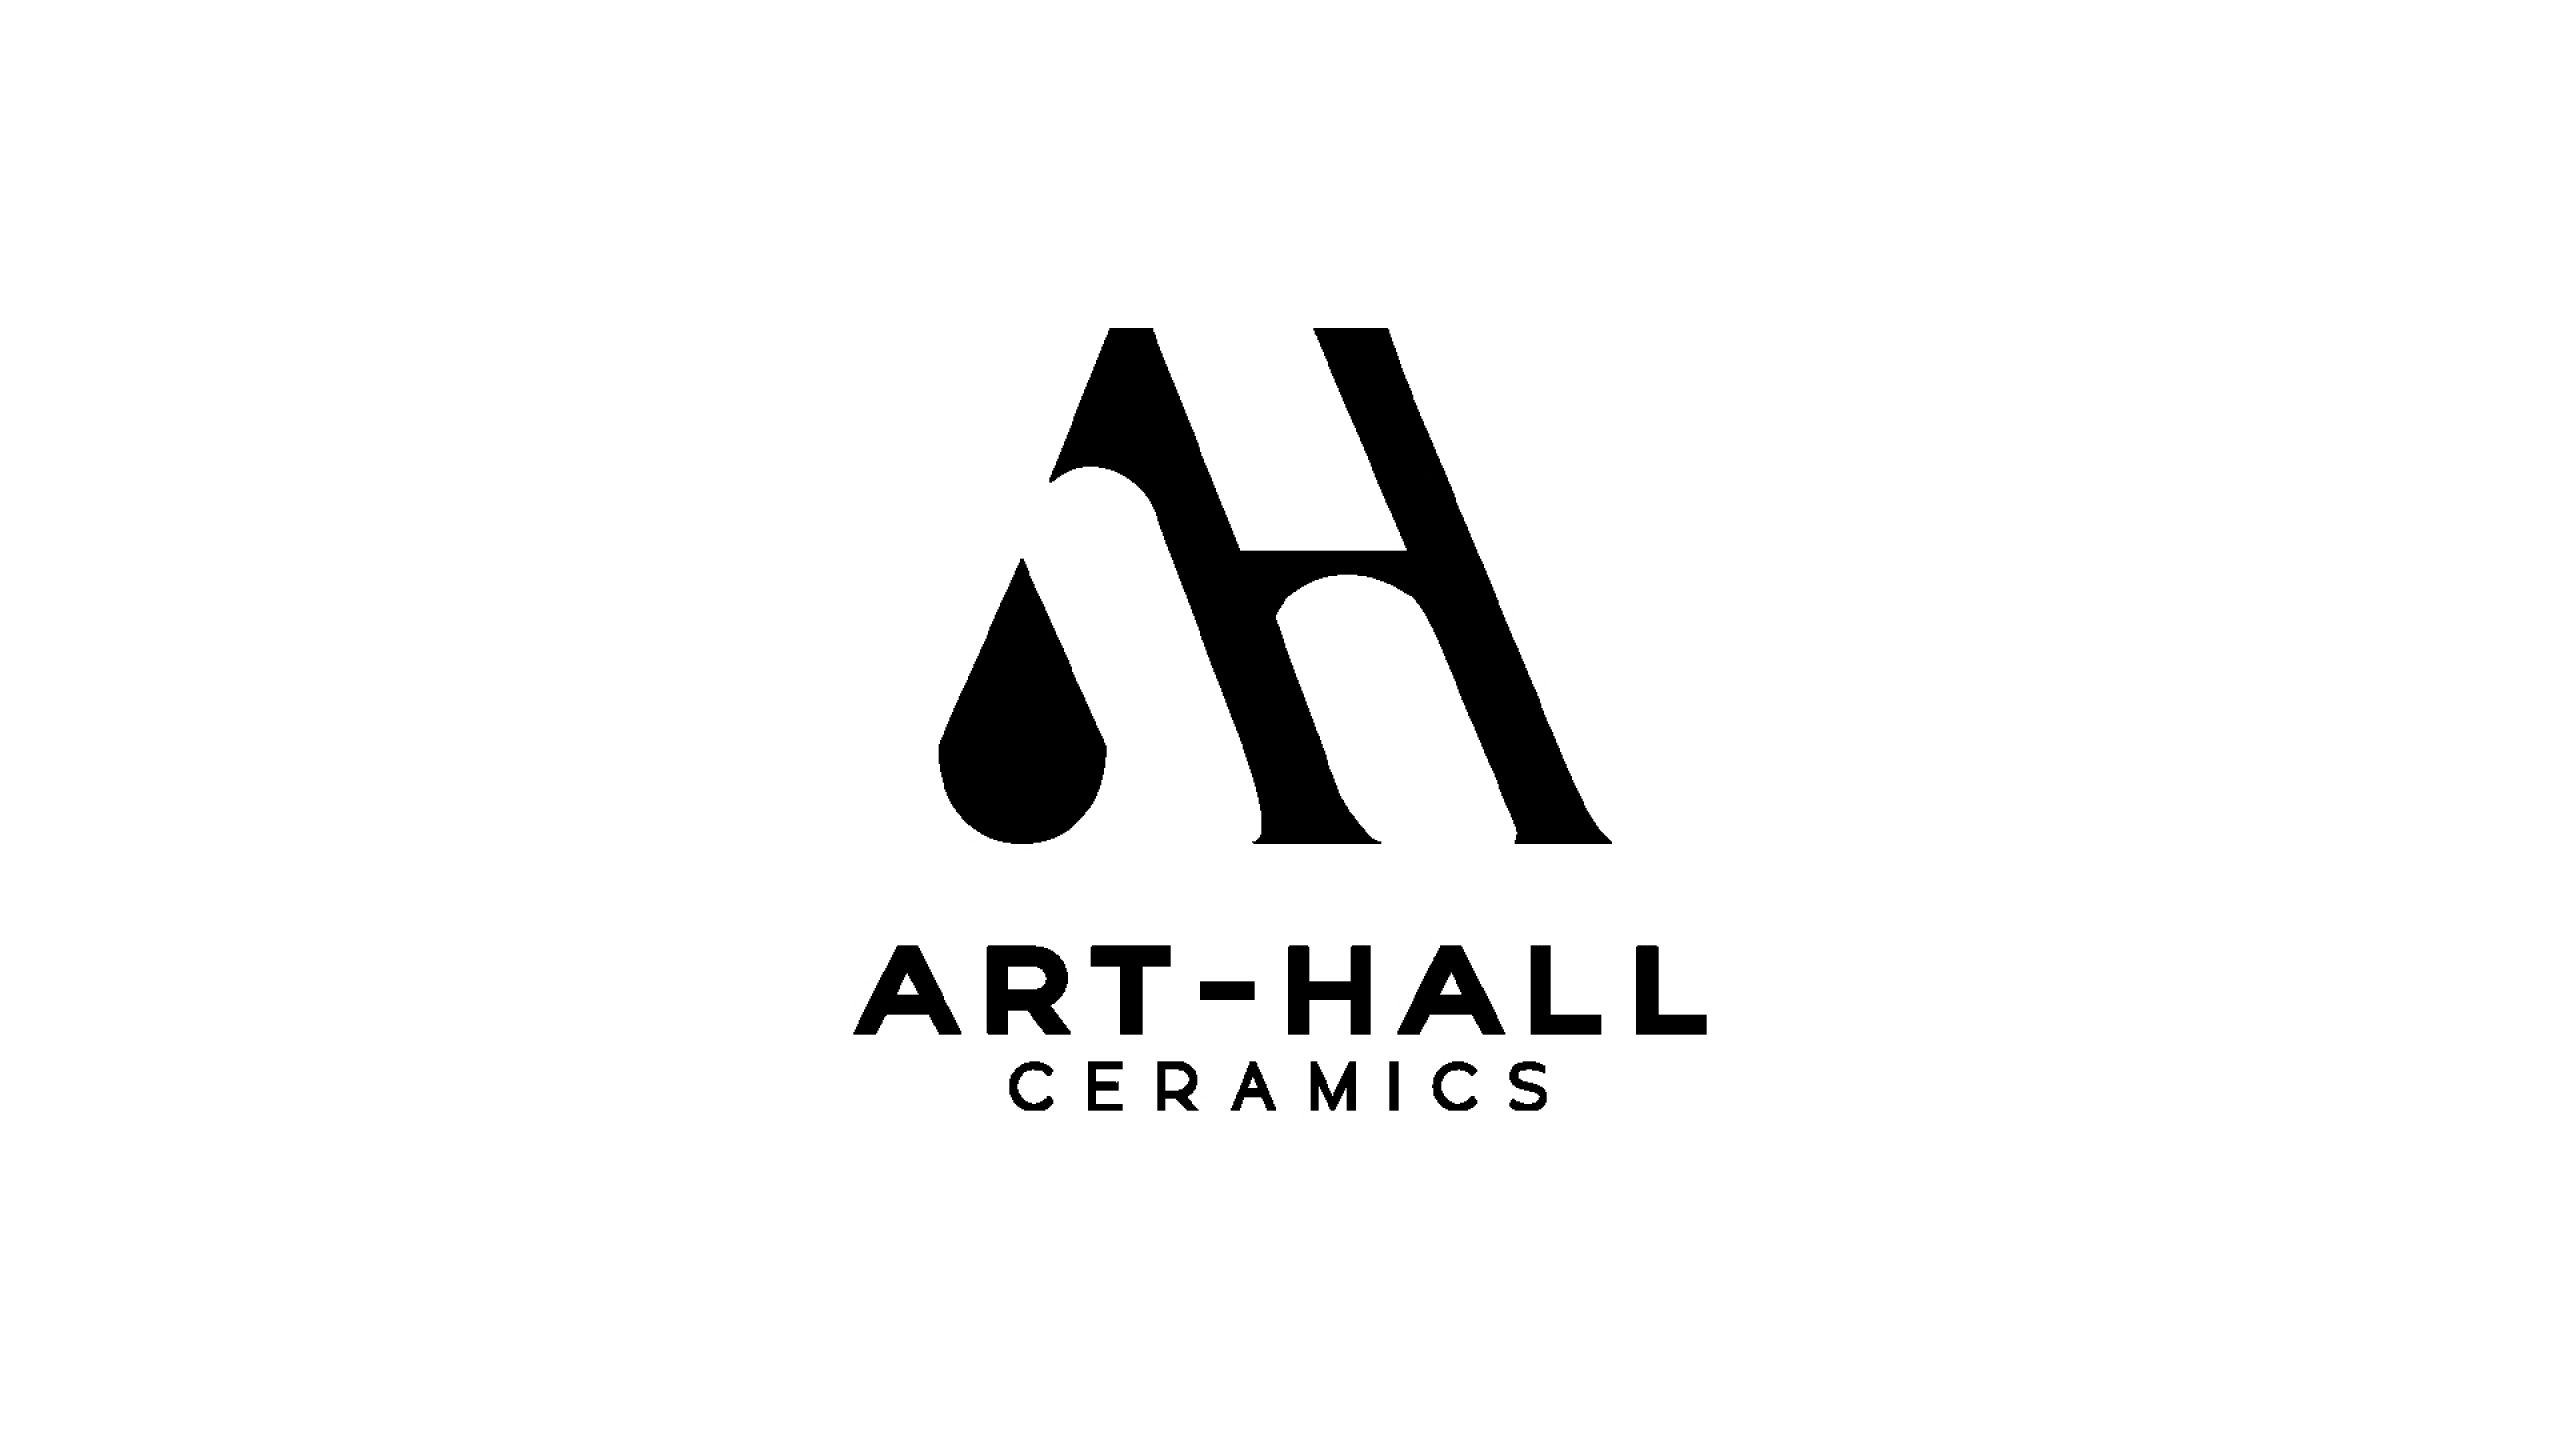 Art-Hall ceramics